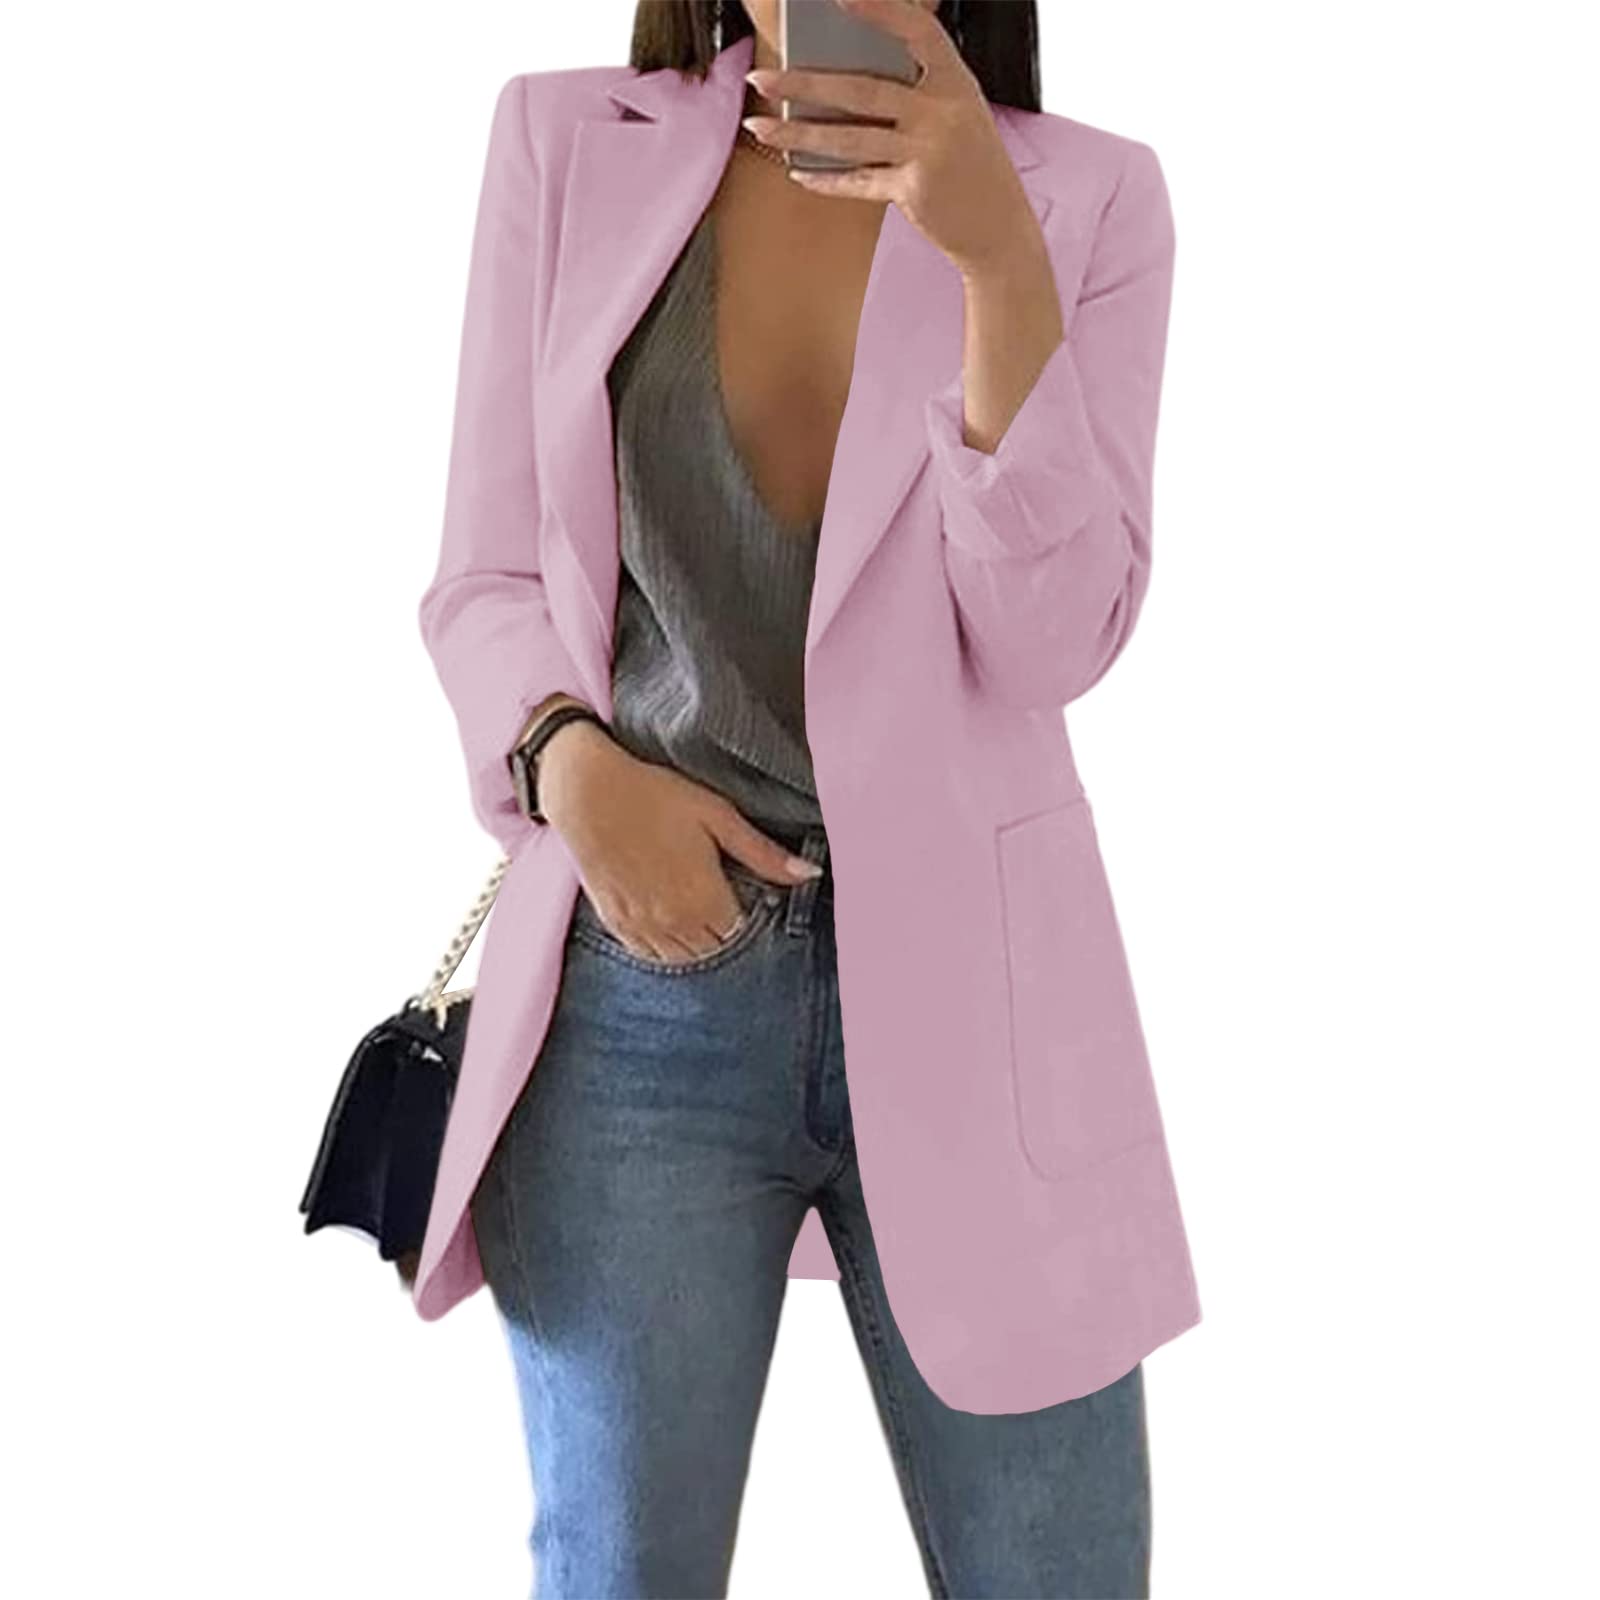 cnkwei Womens casual Blazers Open Front Long Sleeve Lapel collar Work Office Jacket Light Purple